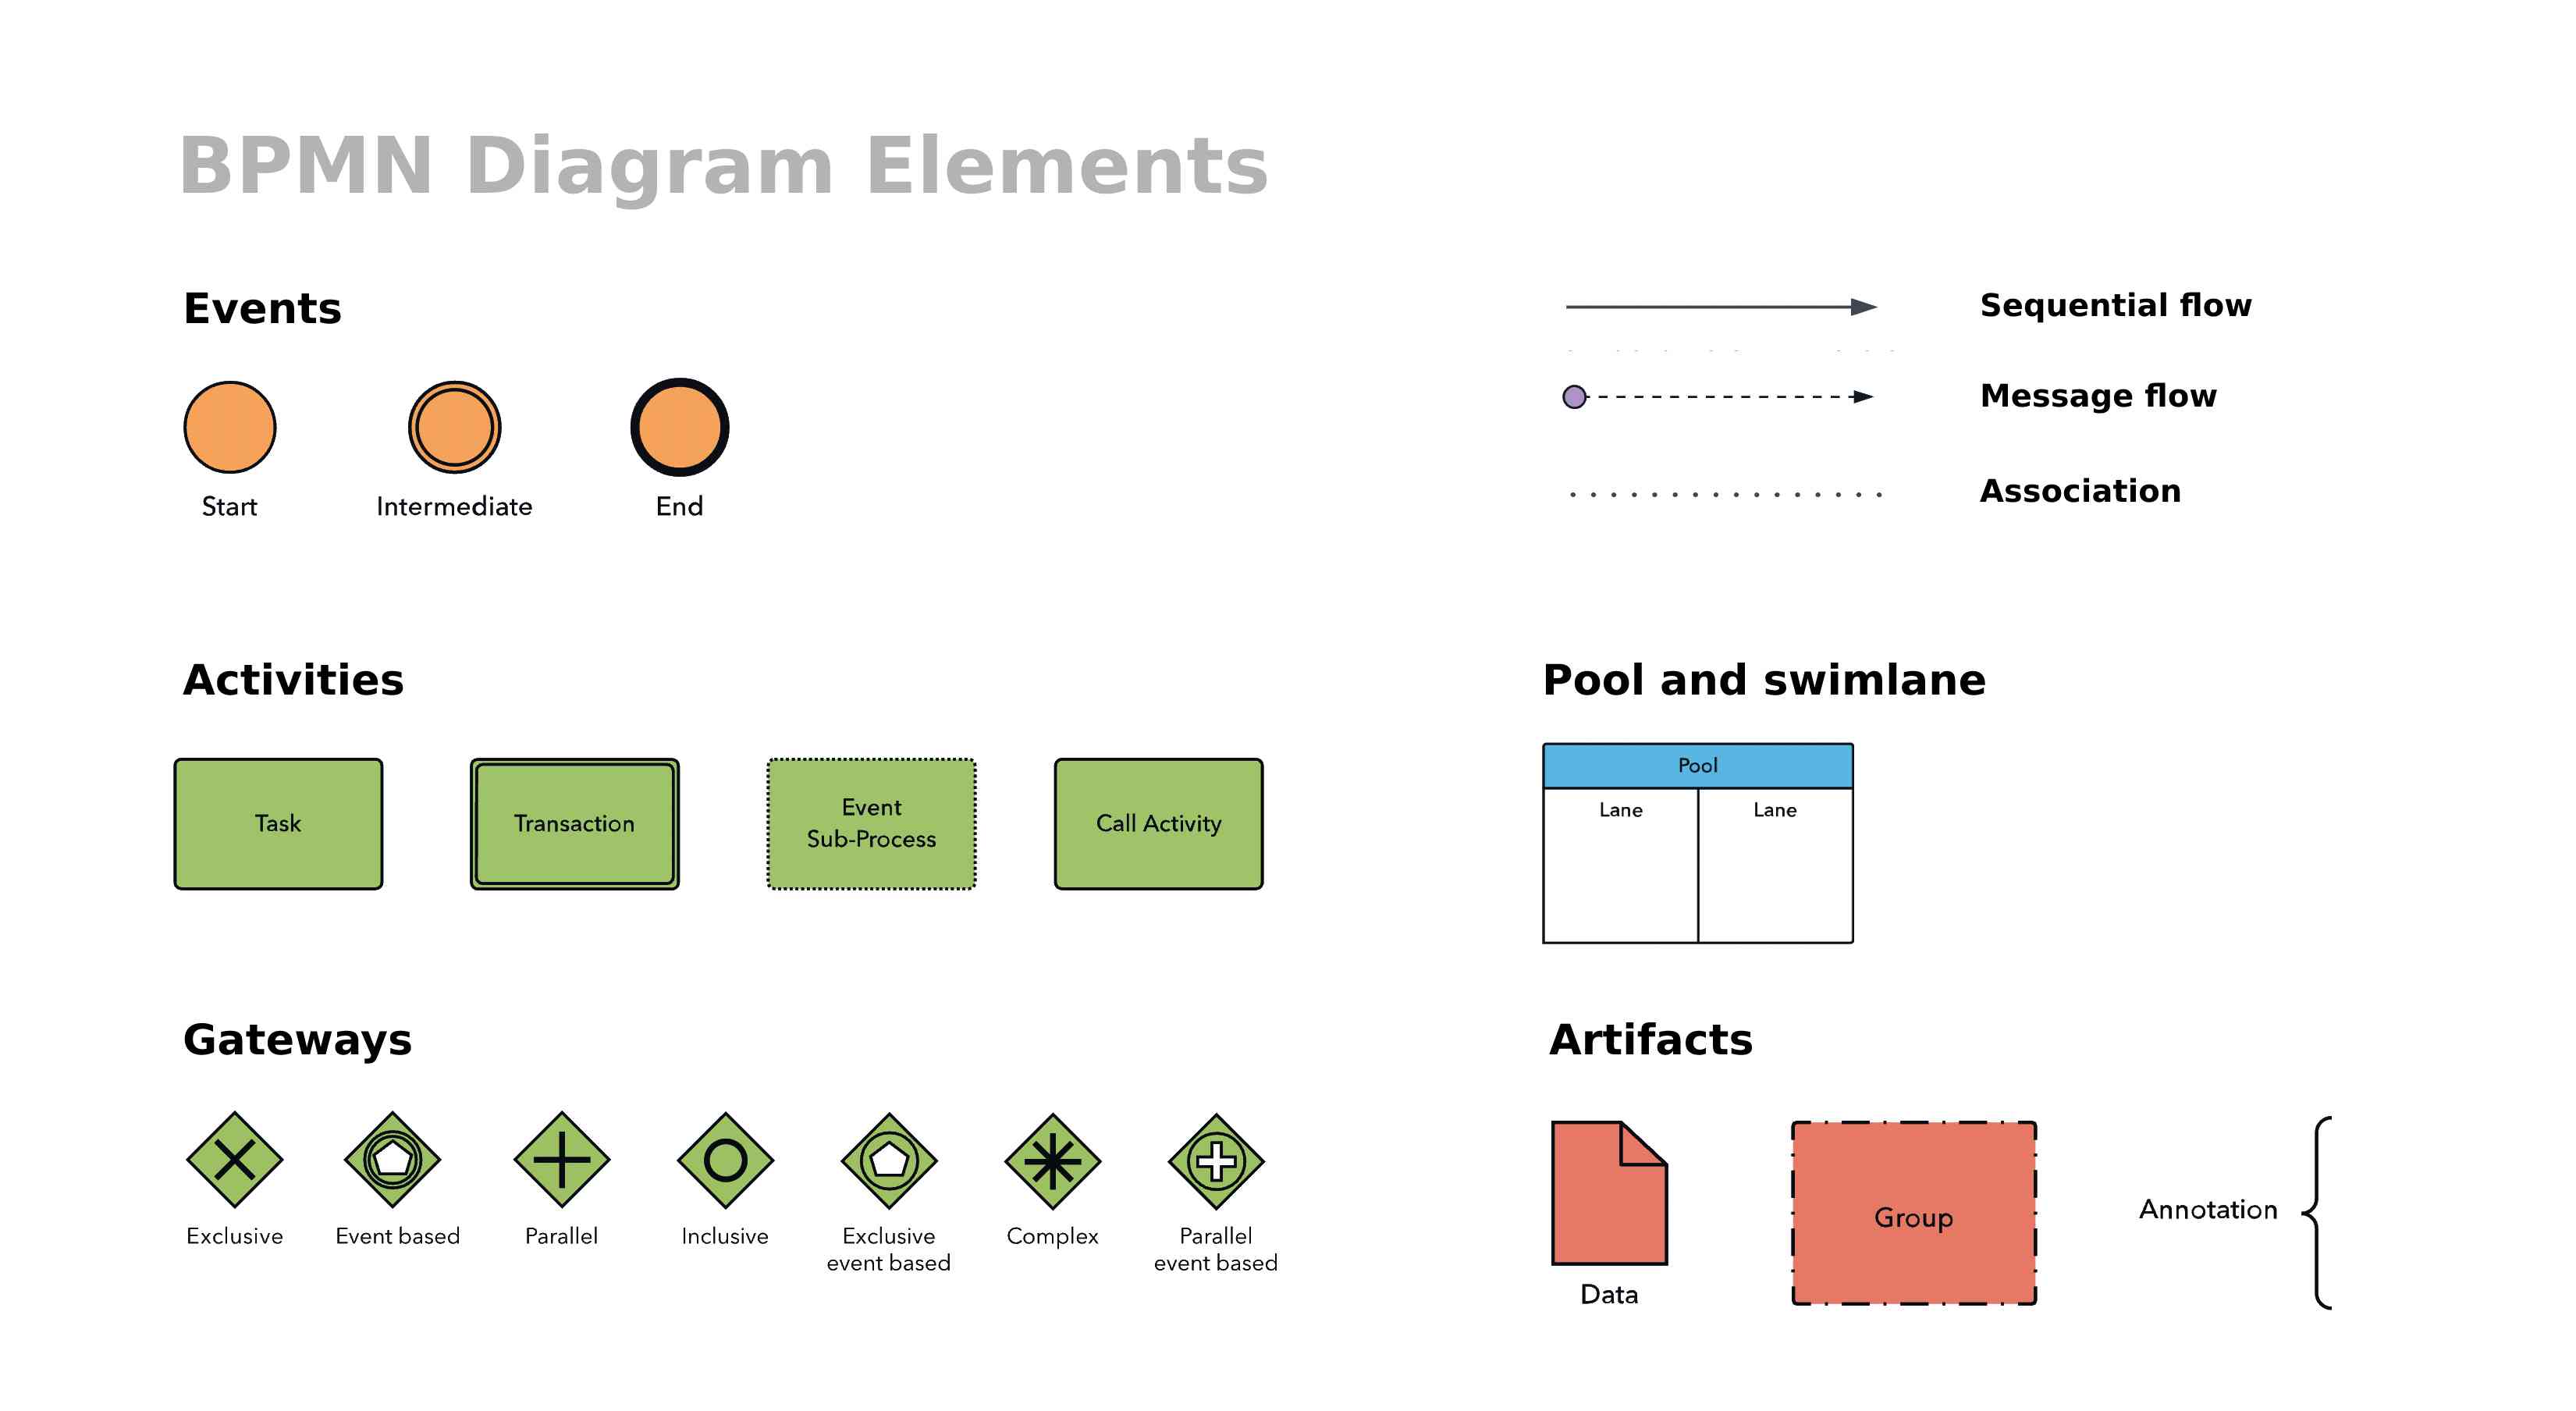 BPMN diagram elements